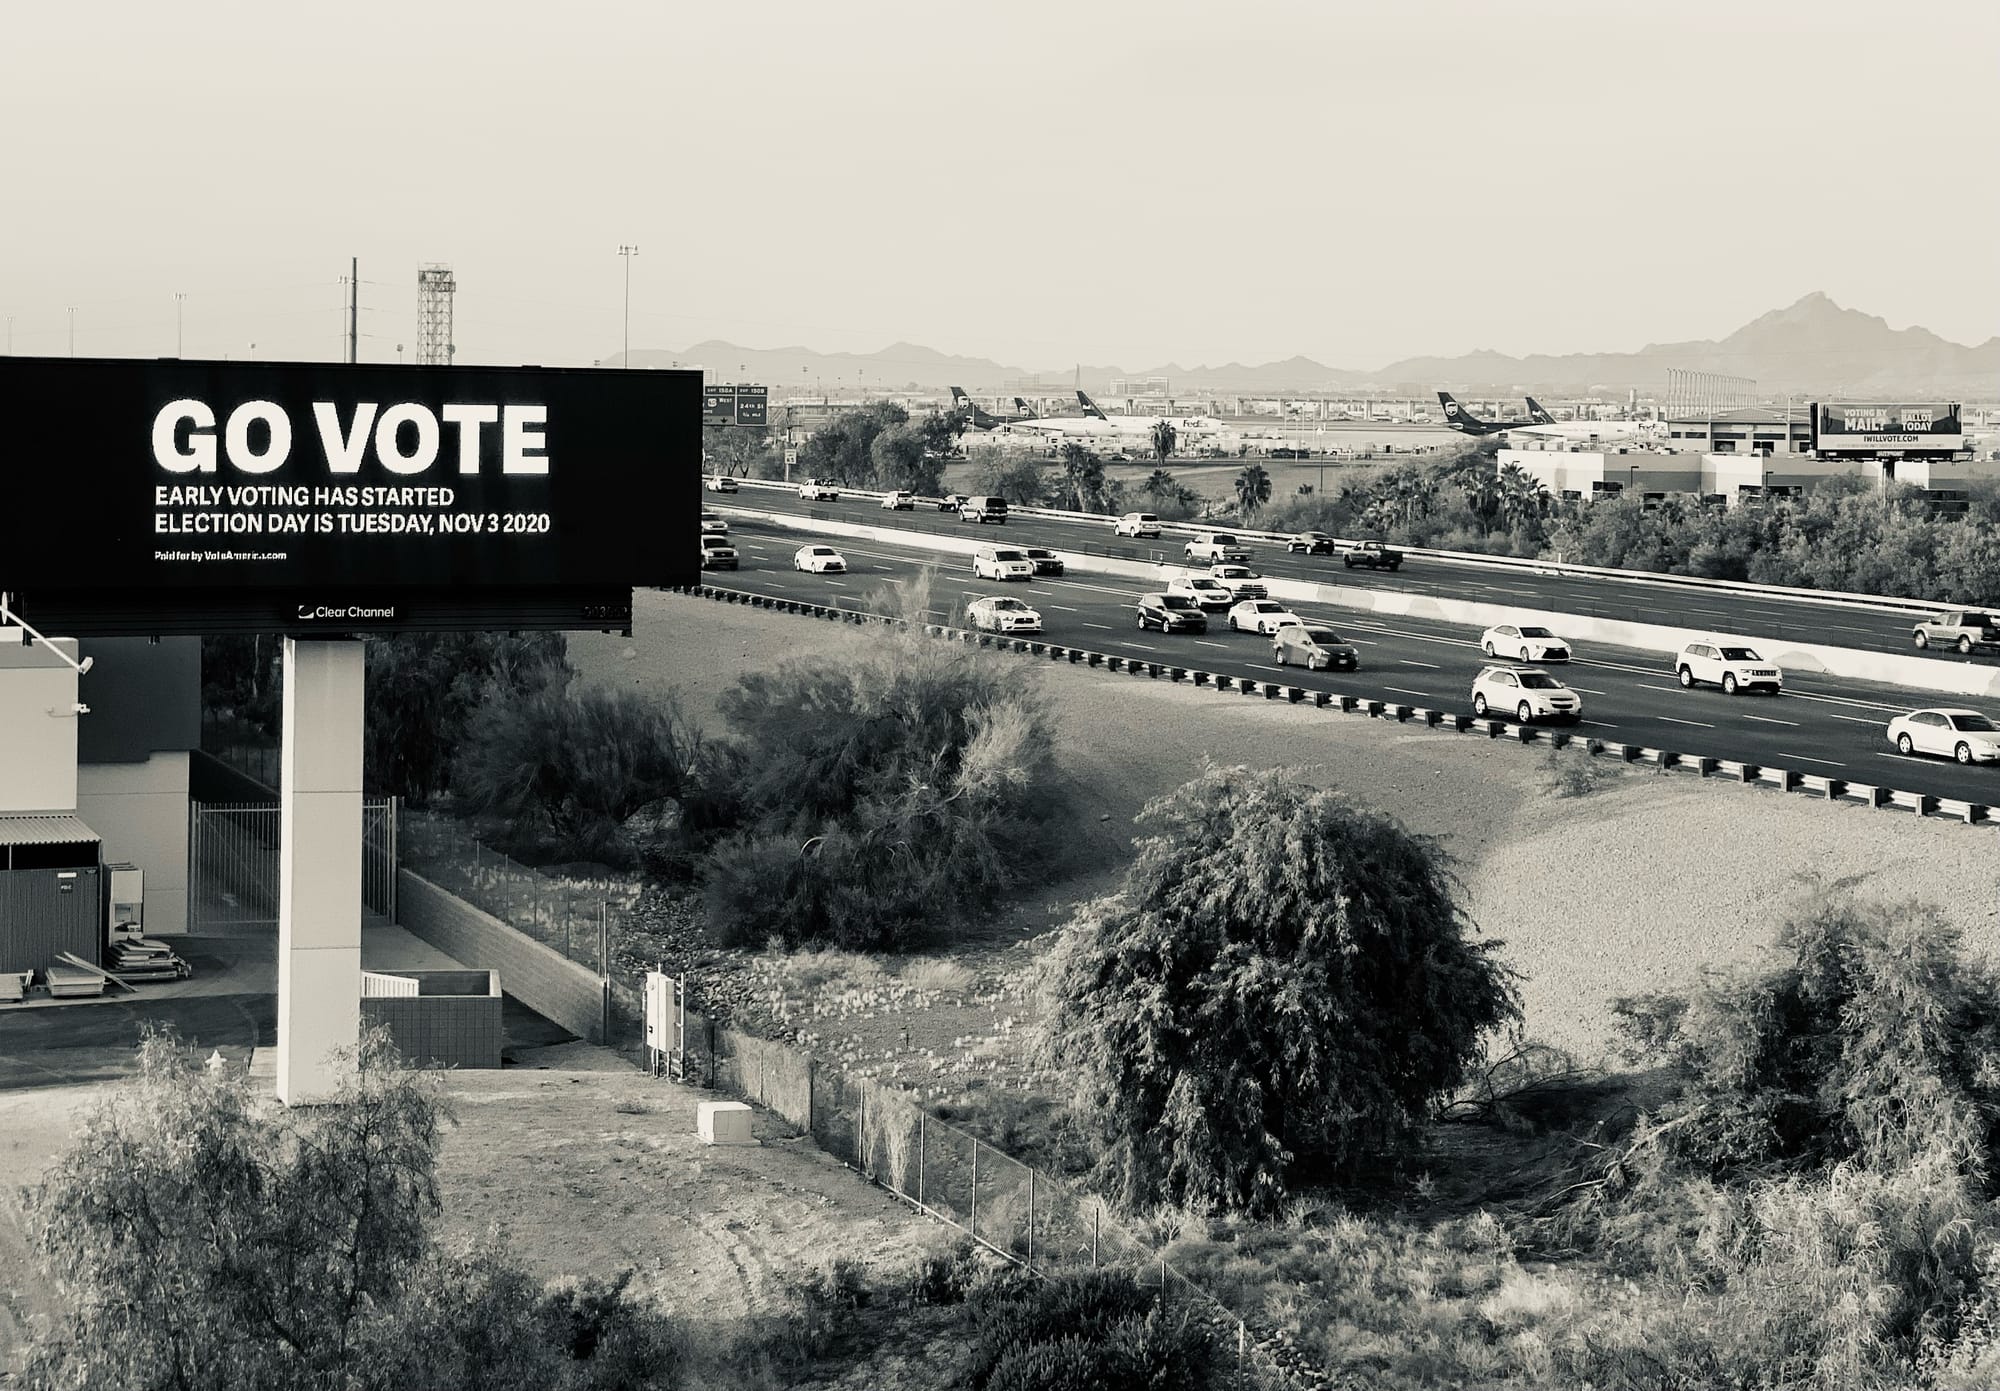 VoteAmerica’s 2020 billboard and gas station GOTV campaign